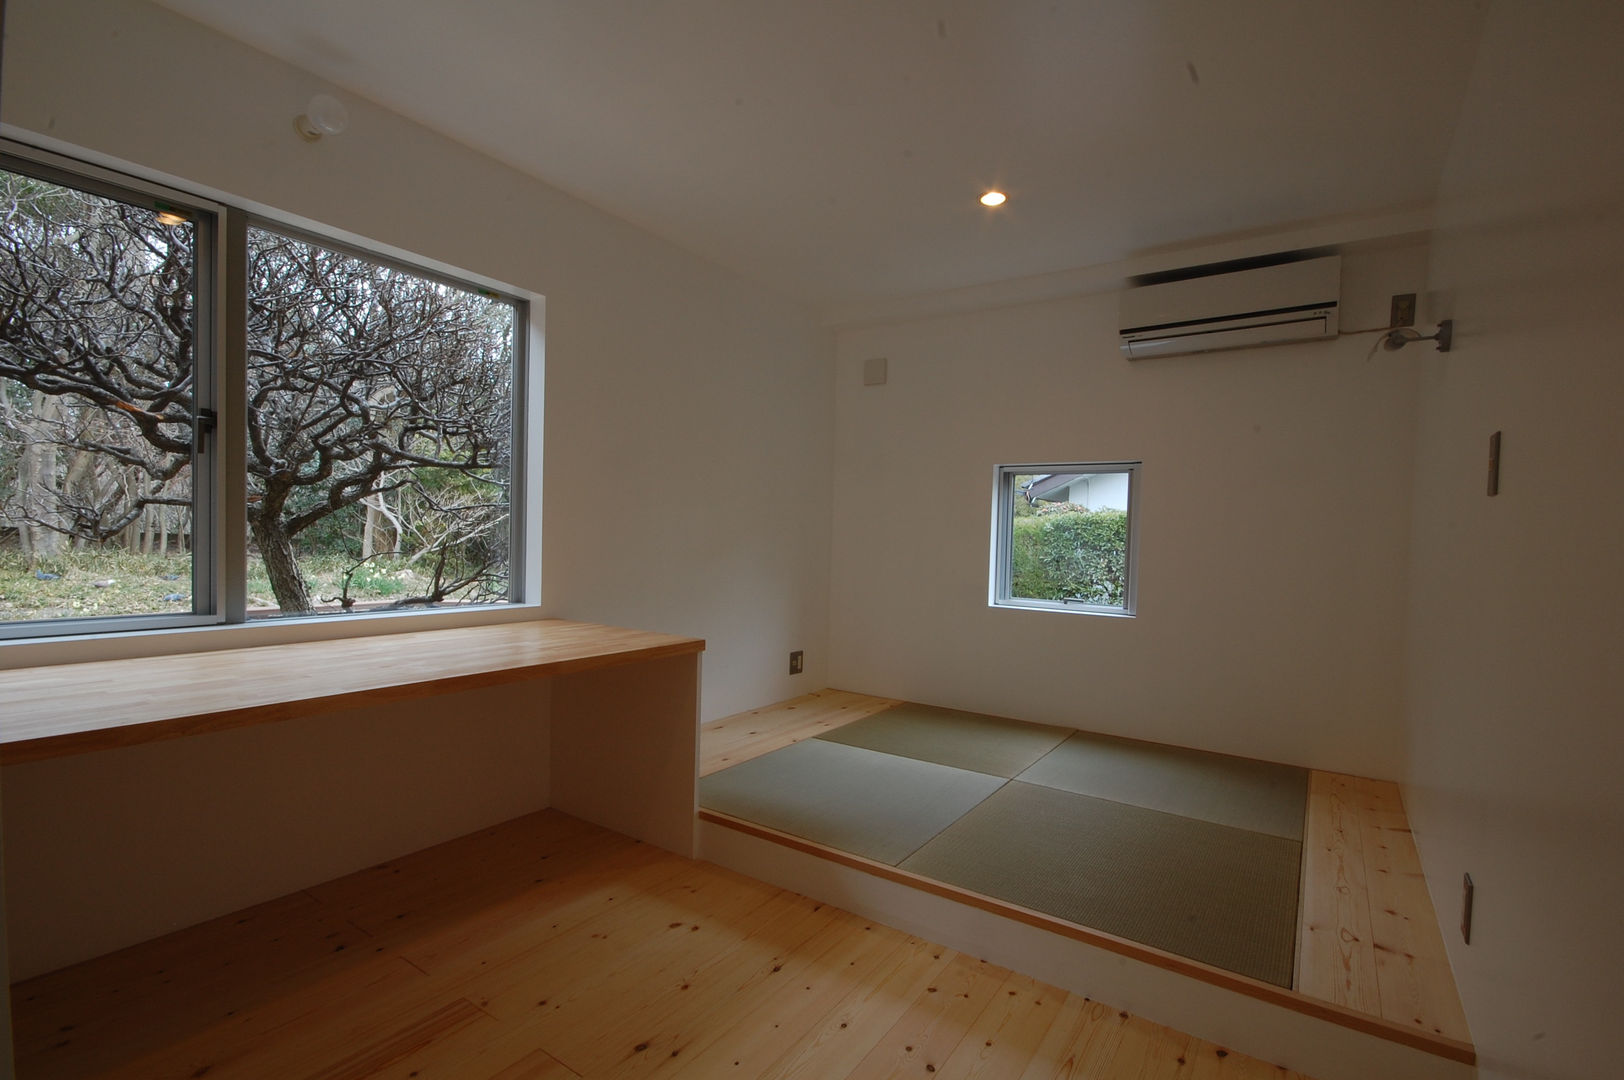 Ｓ教授の家＿寝室 佐賀高橋設計室／SAGA + TAKAHASHI architects studio 和風の 寝室